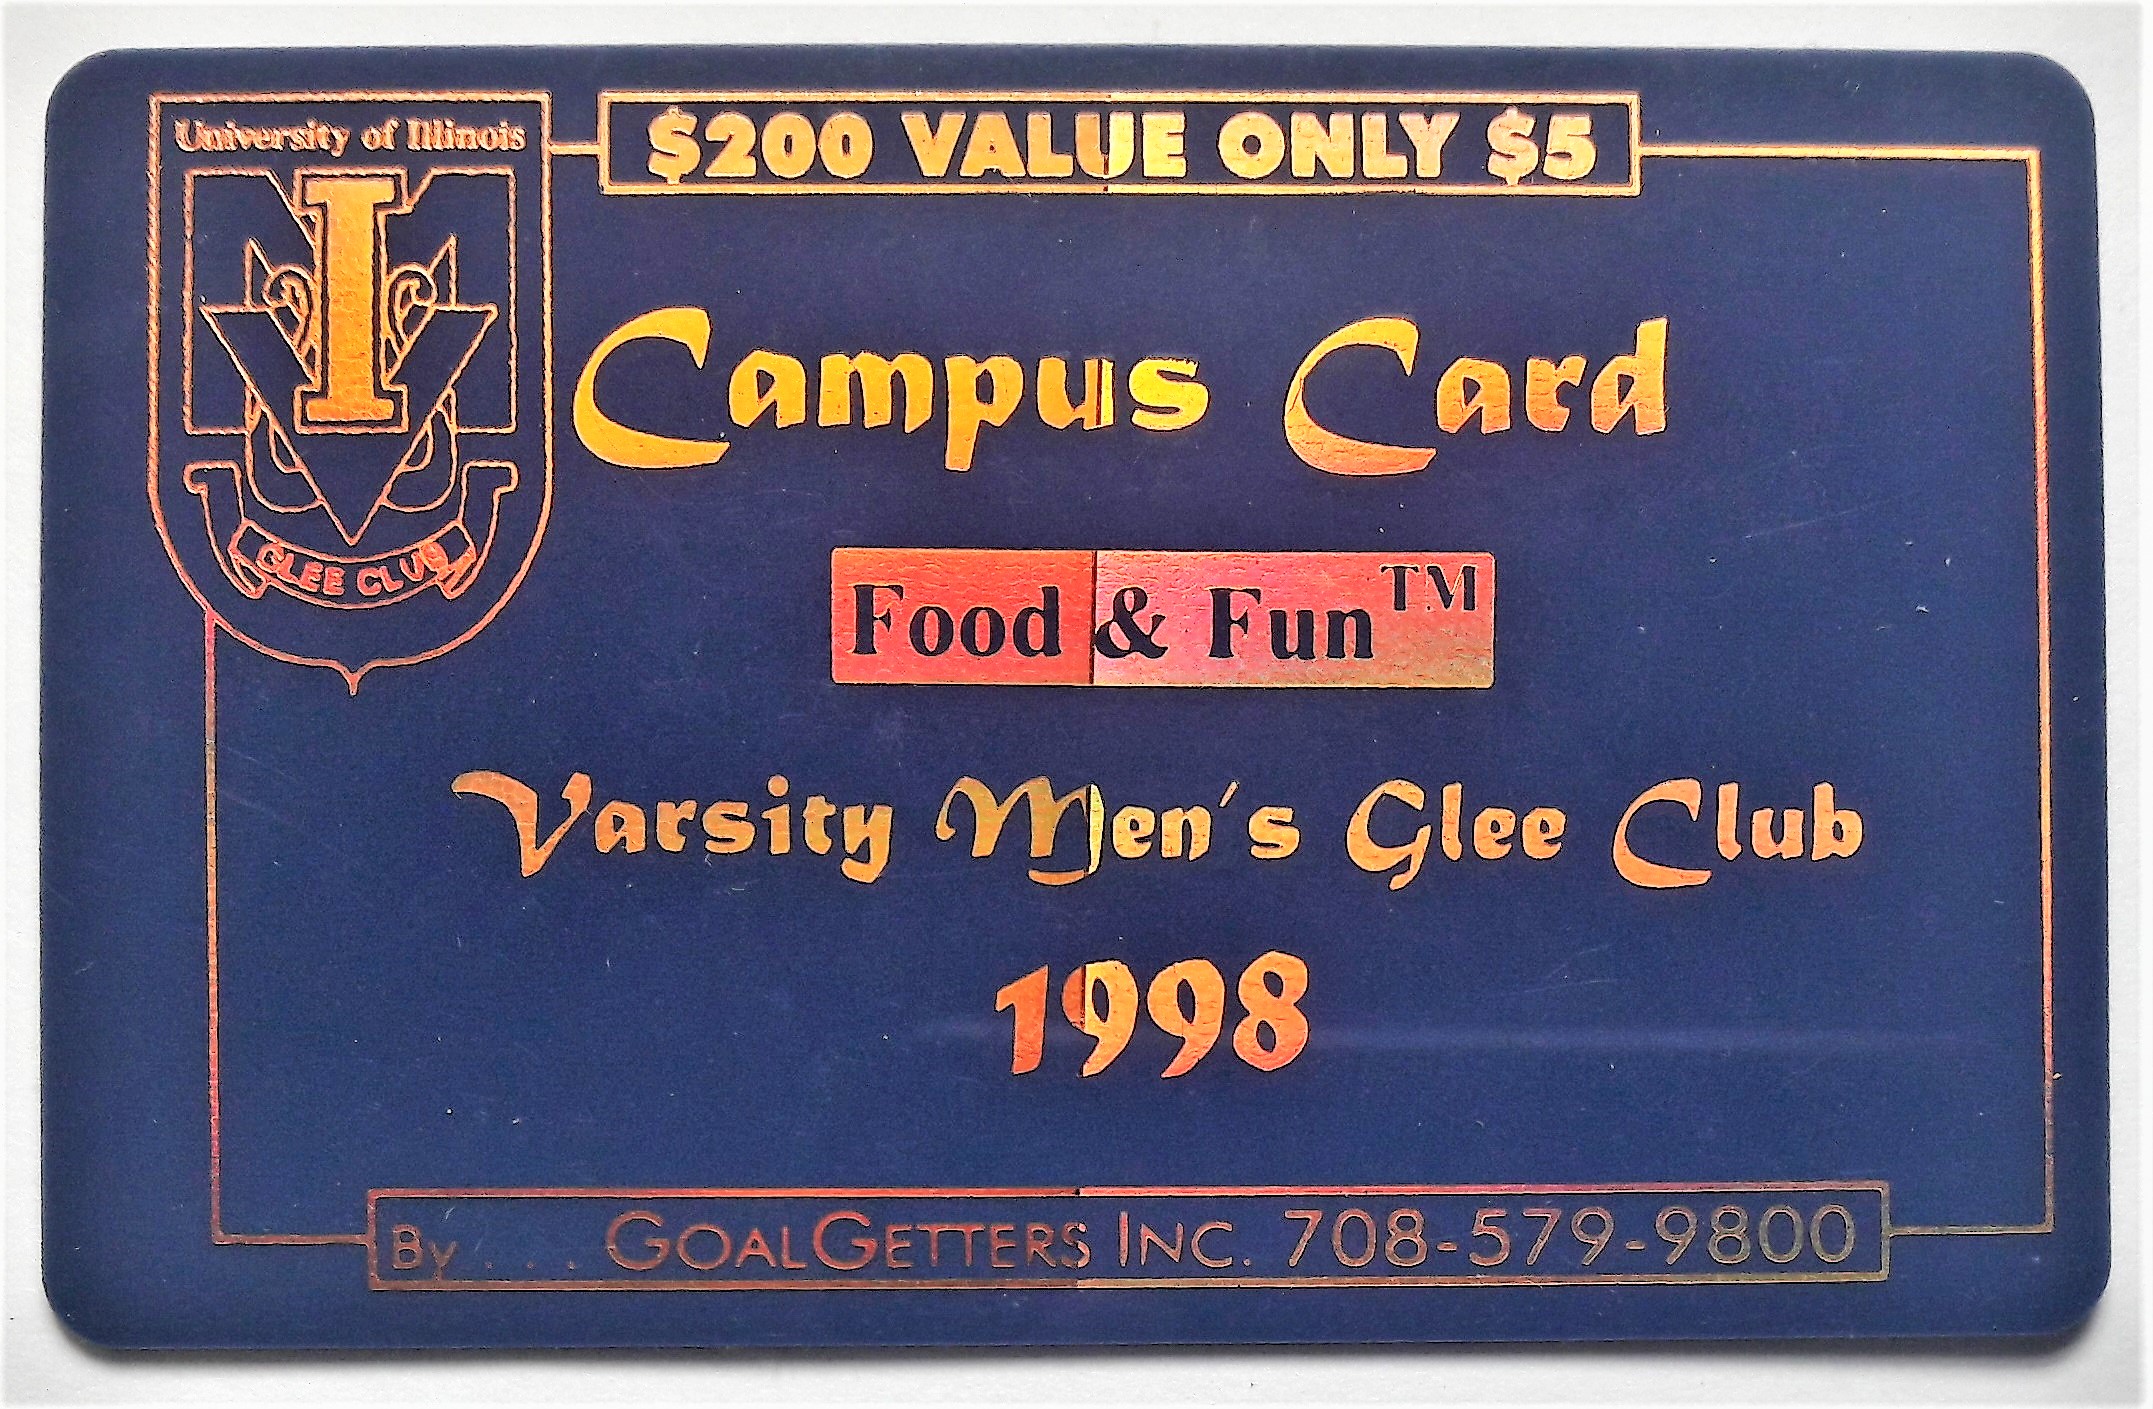 University fundraising cards